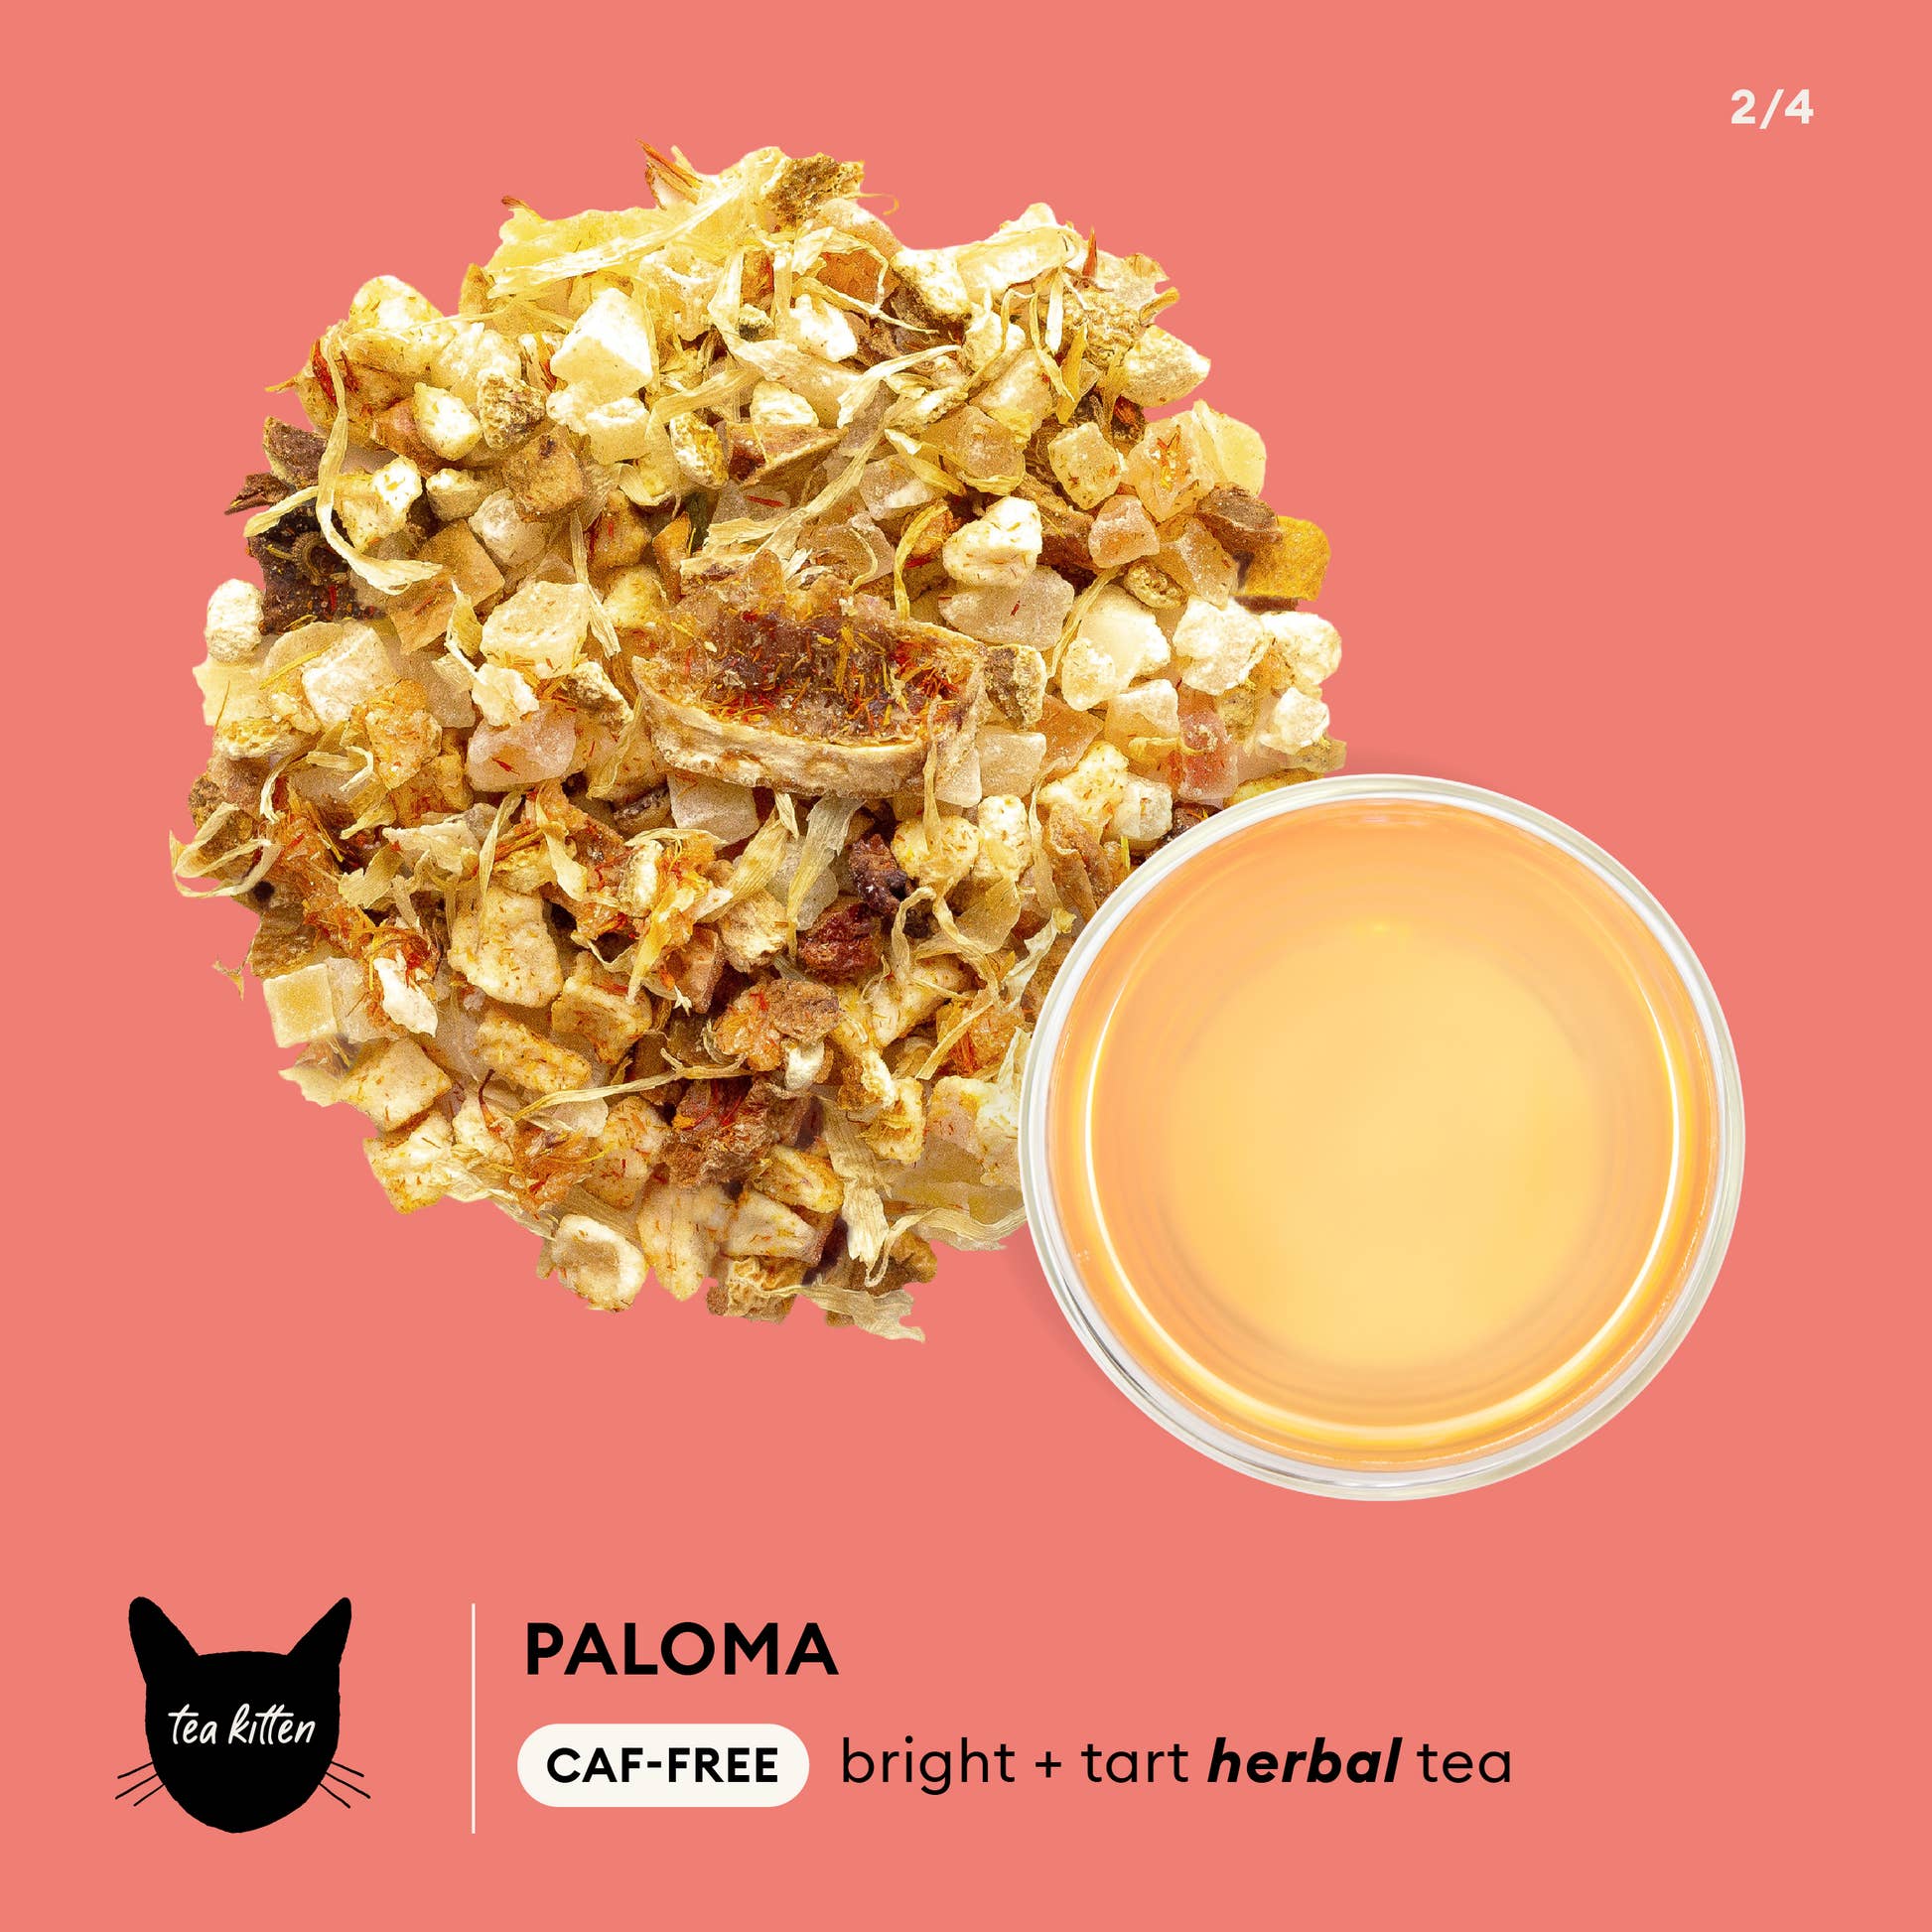 Paloma by Tea Kitten Infographic - Caf-Free bright + tart herbal tea